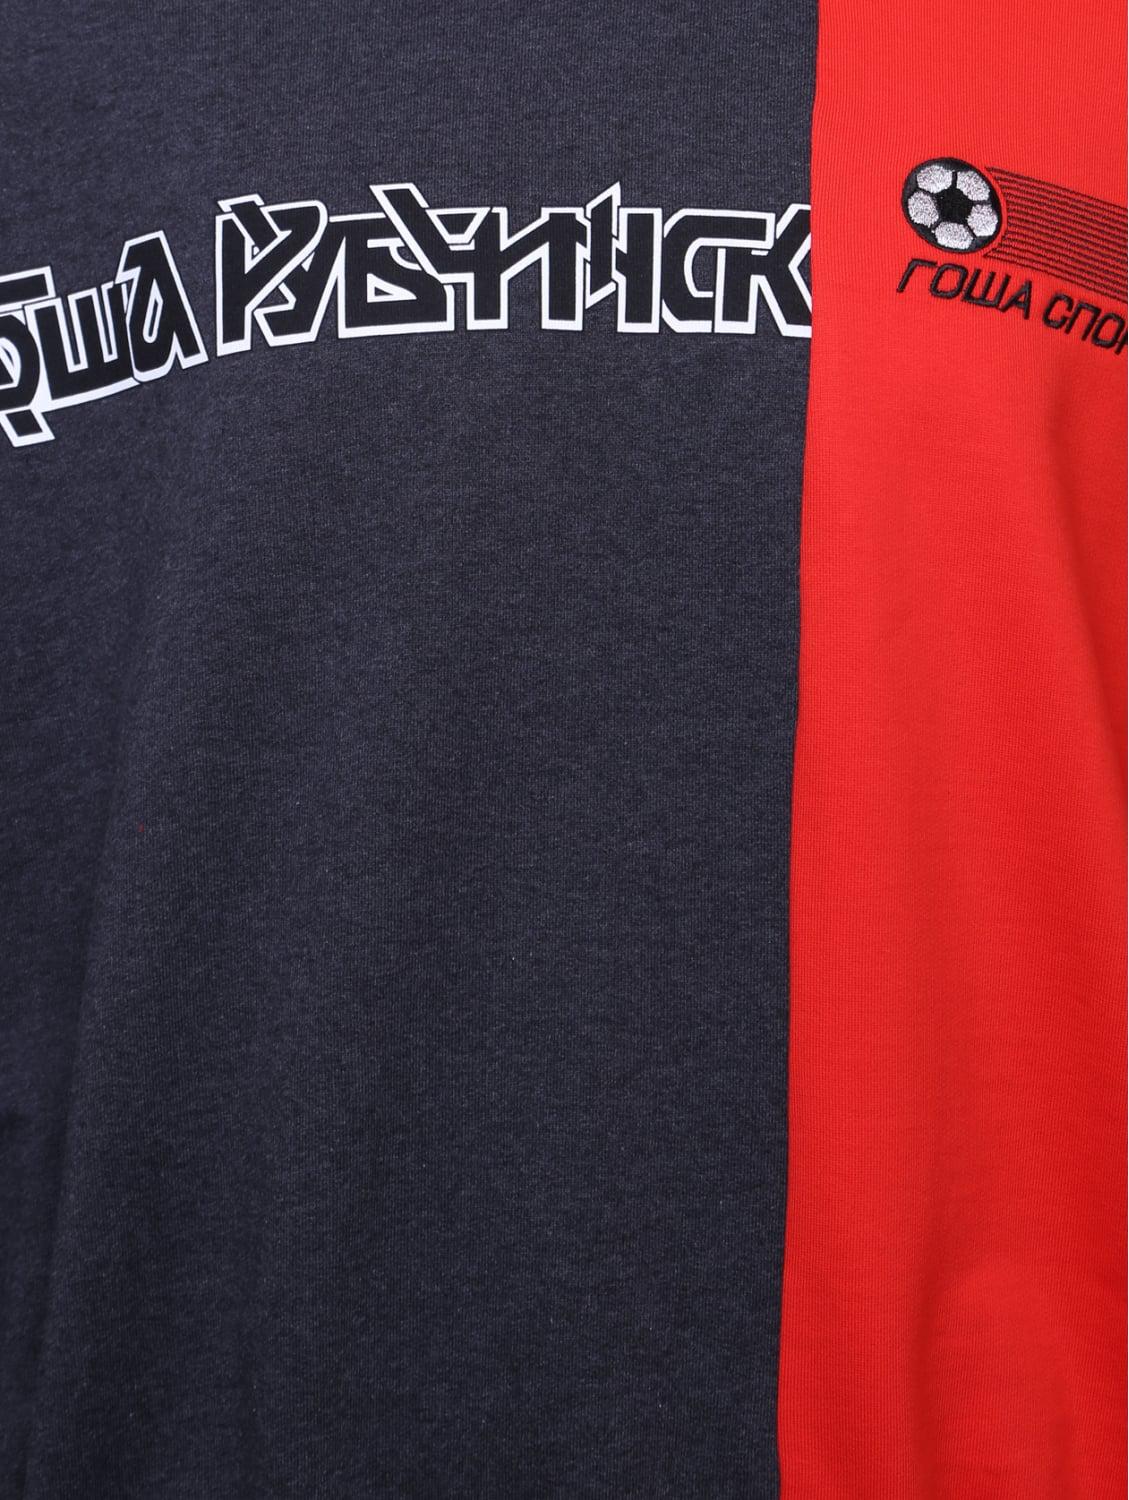 Dark Grey and Red Logo - Gosha Rubchinskiy Two Tone Combo Logo Sweater Dark Grey Red in Gray ...